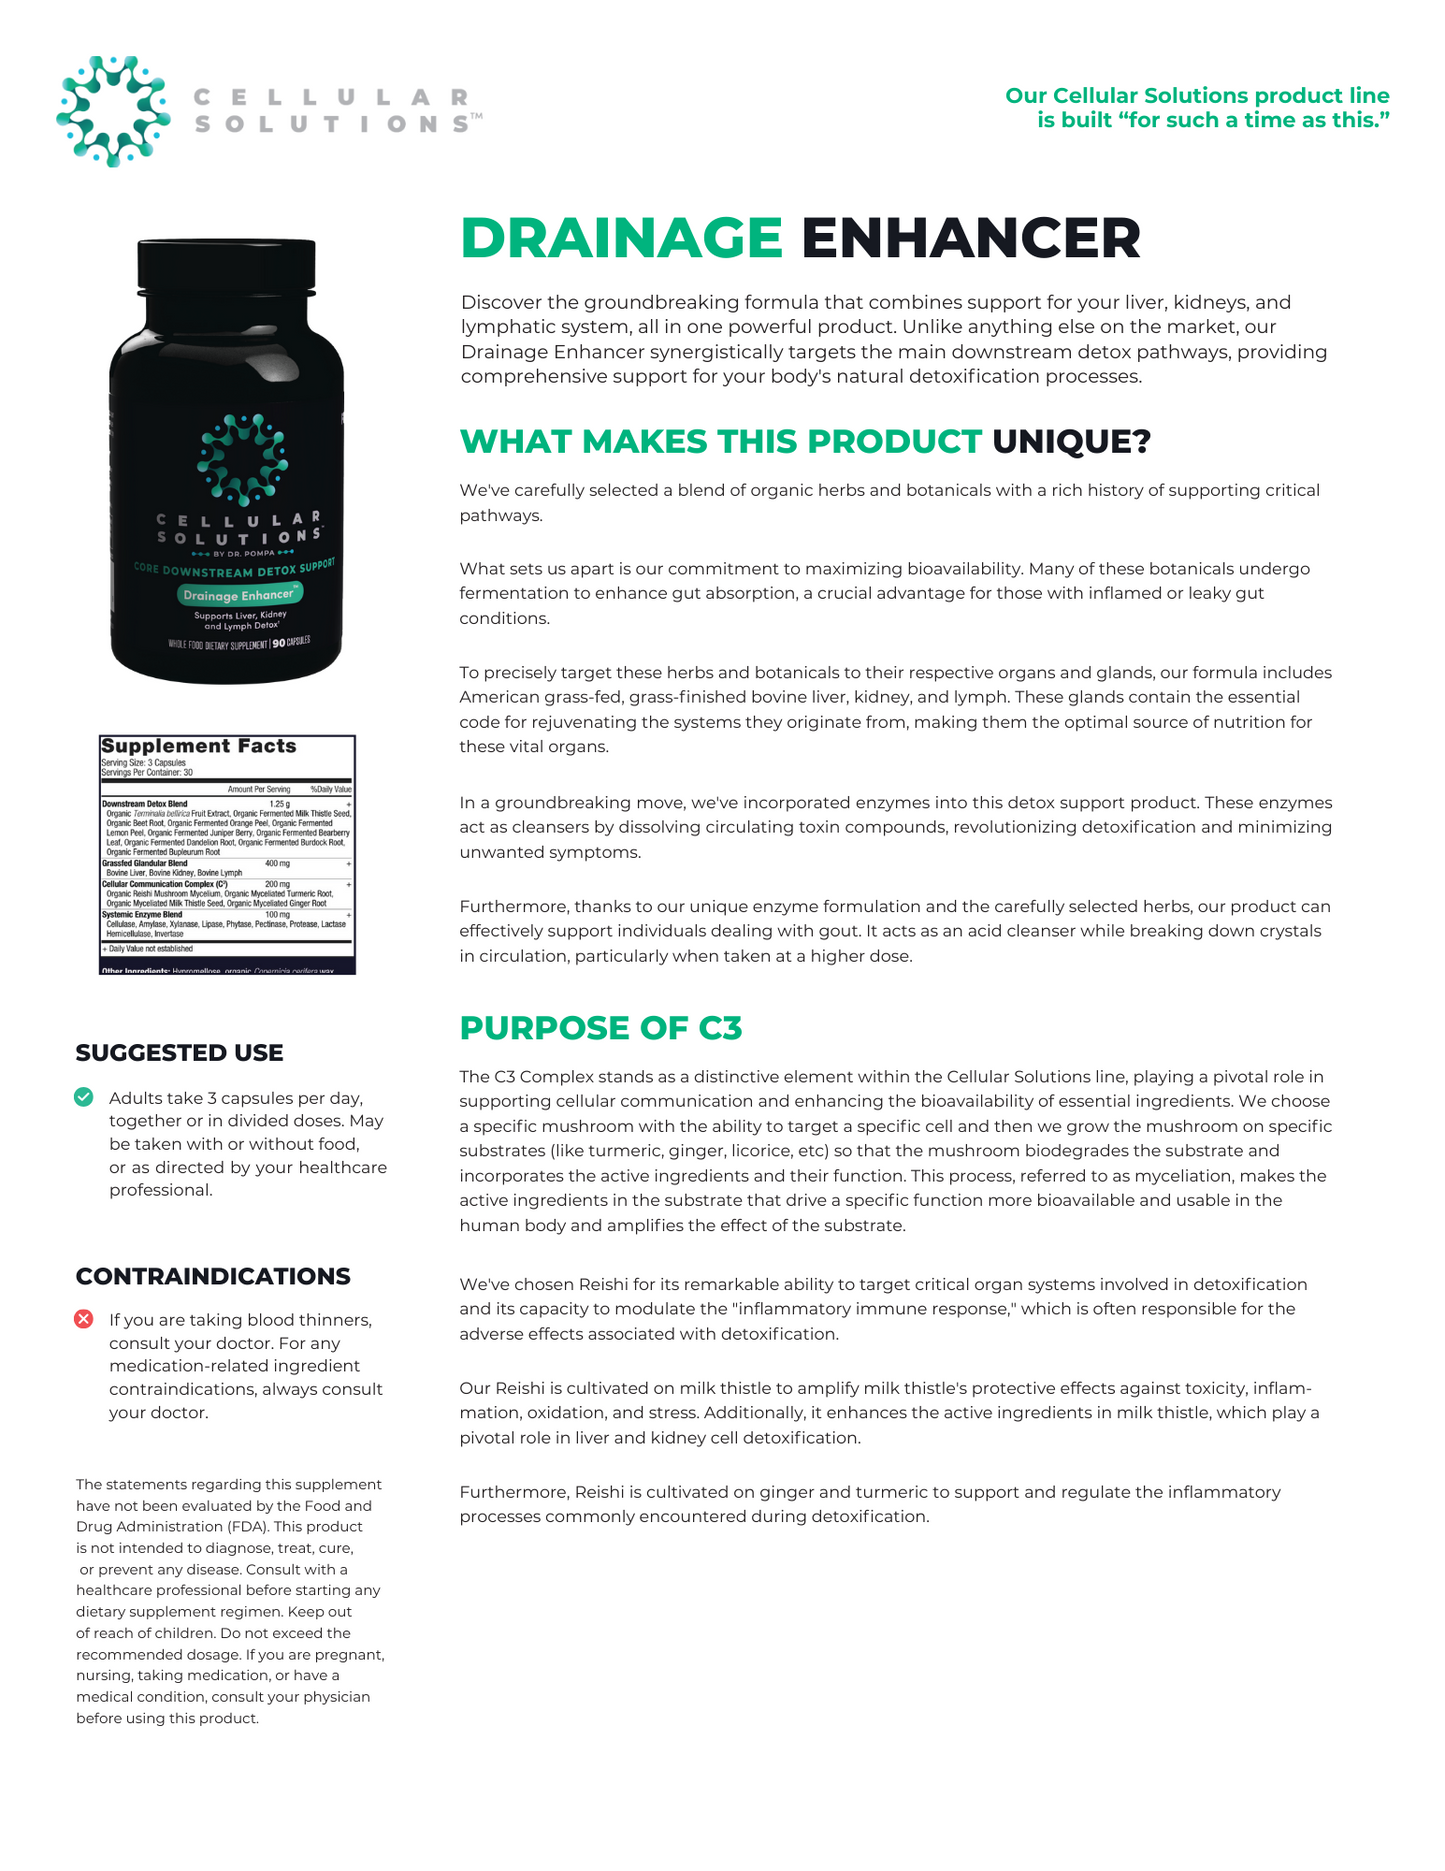 Drainage Enhancer